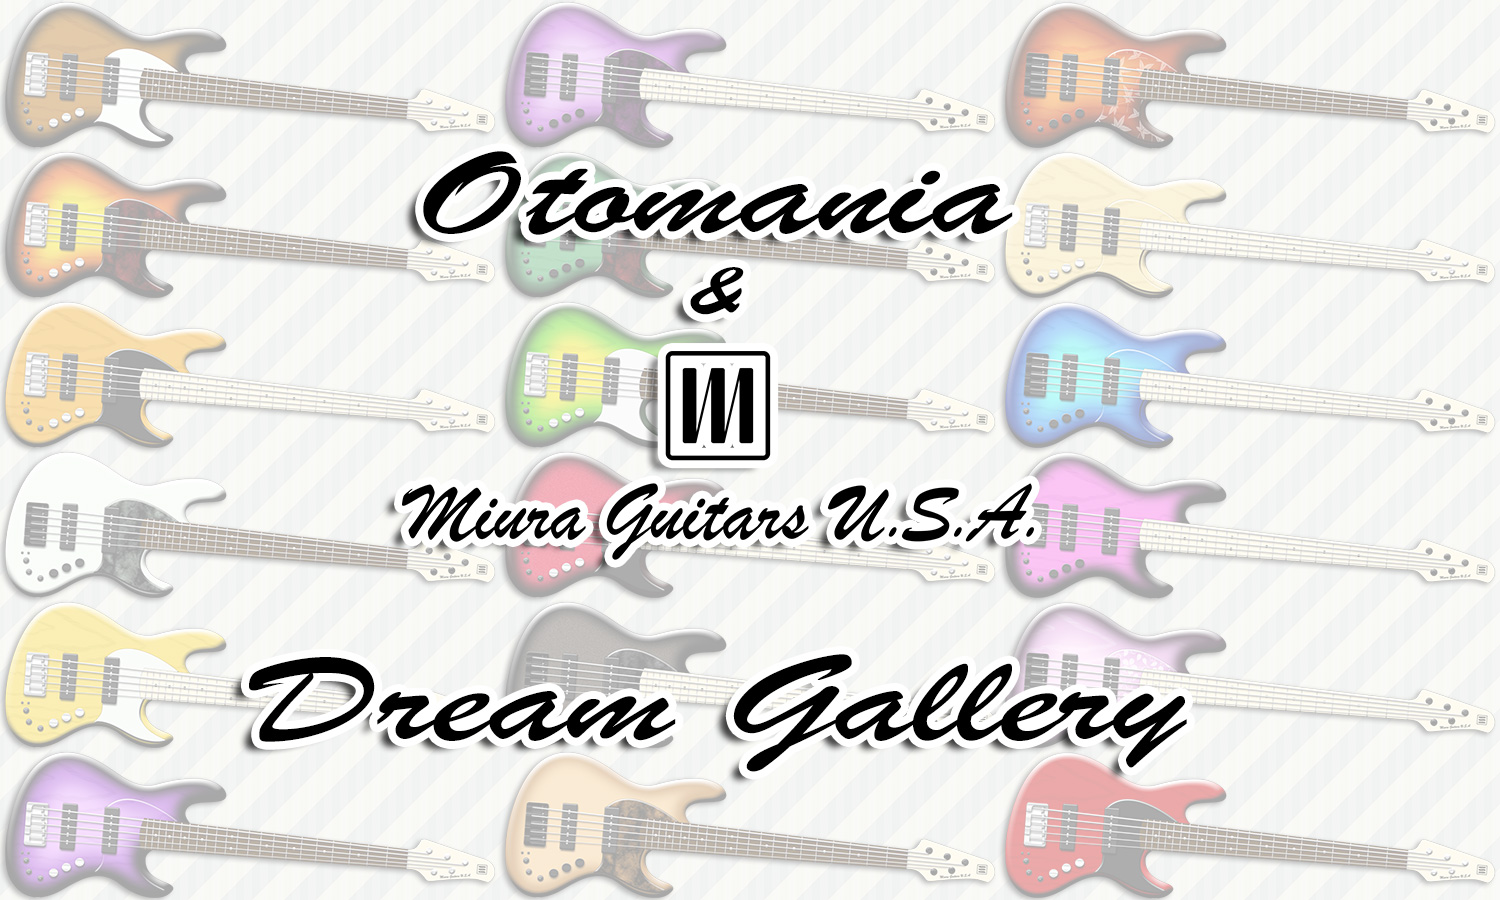 Otomania Dream Gallery, now open